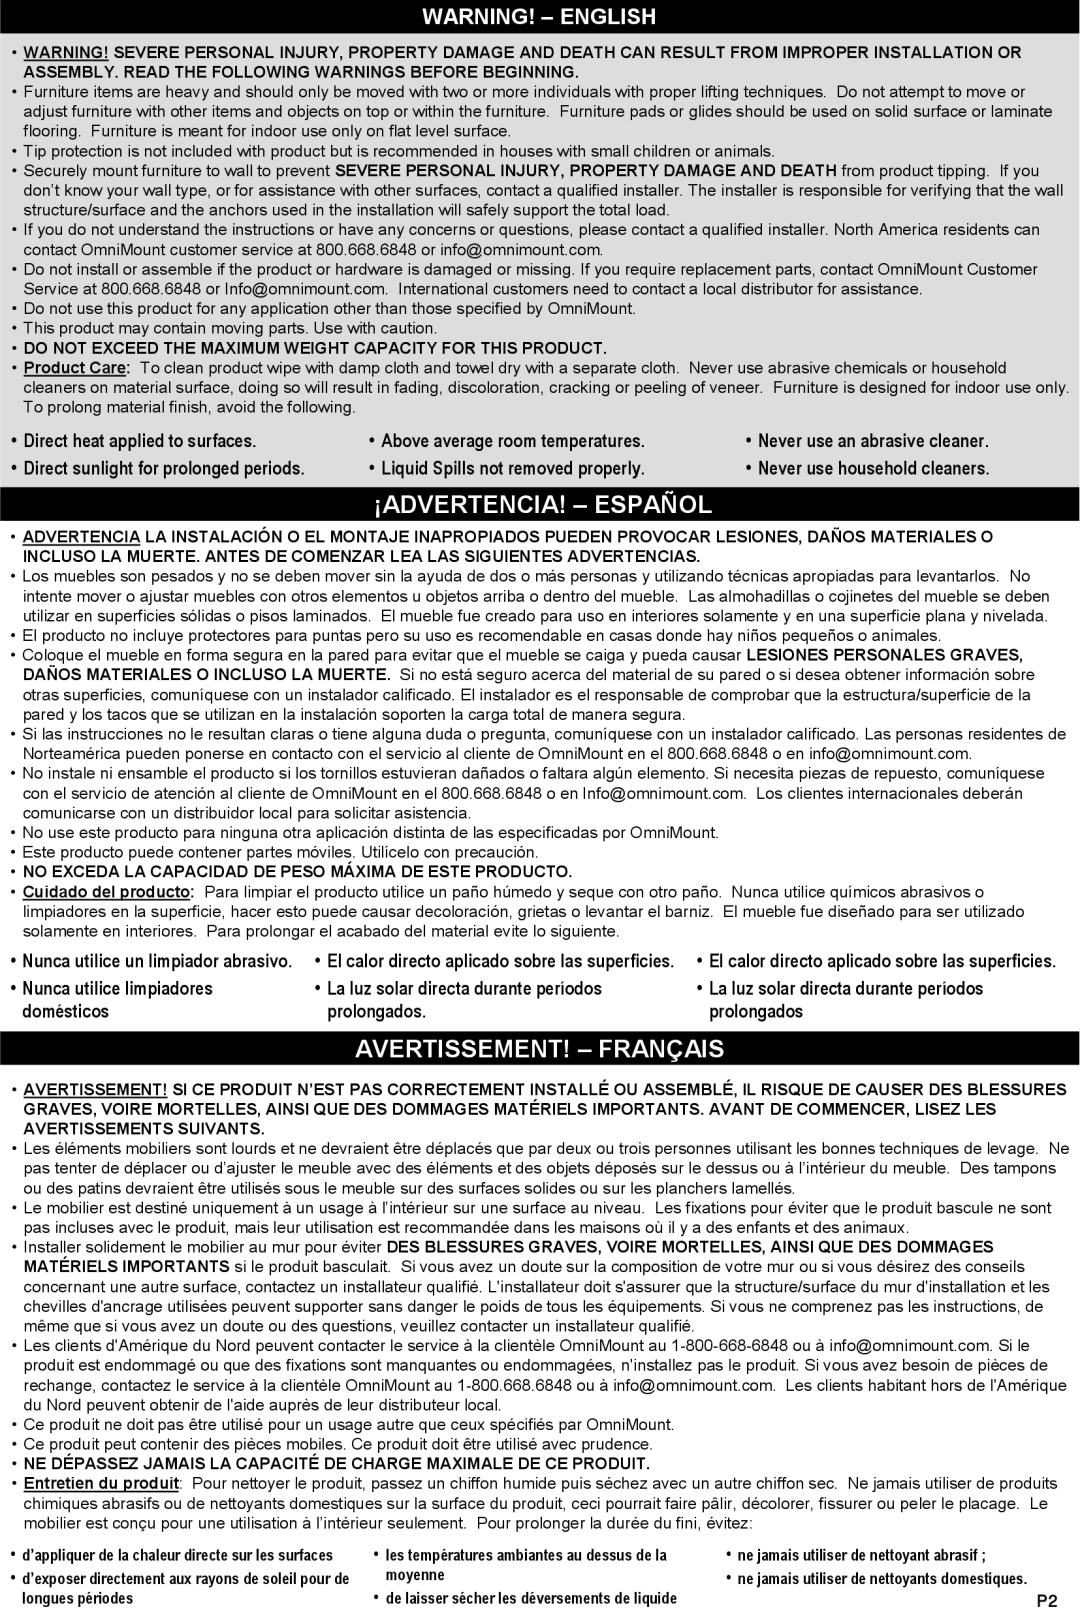 Omnimount LDC31, 1100161 instruction manual ¡Advertencia! - Español, Avertissement! - Français, Warning! - English 